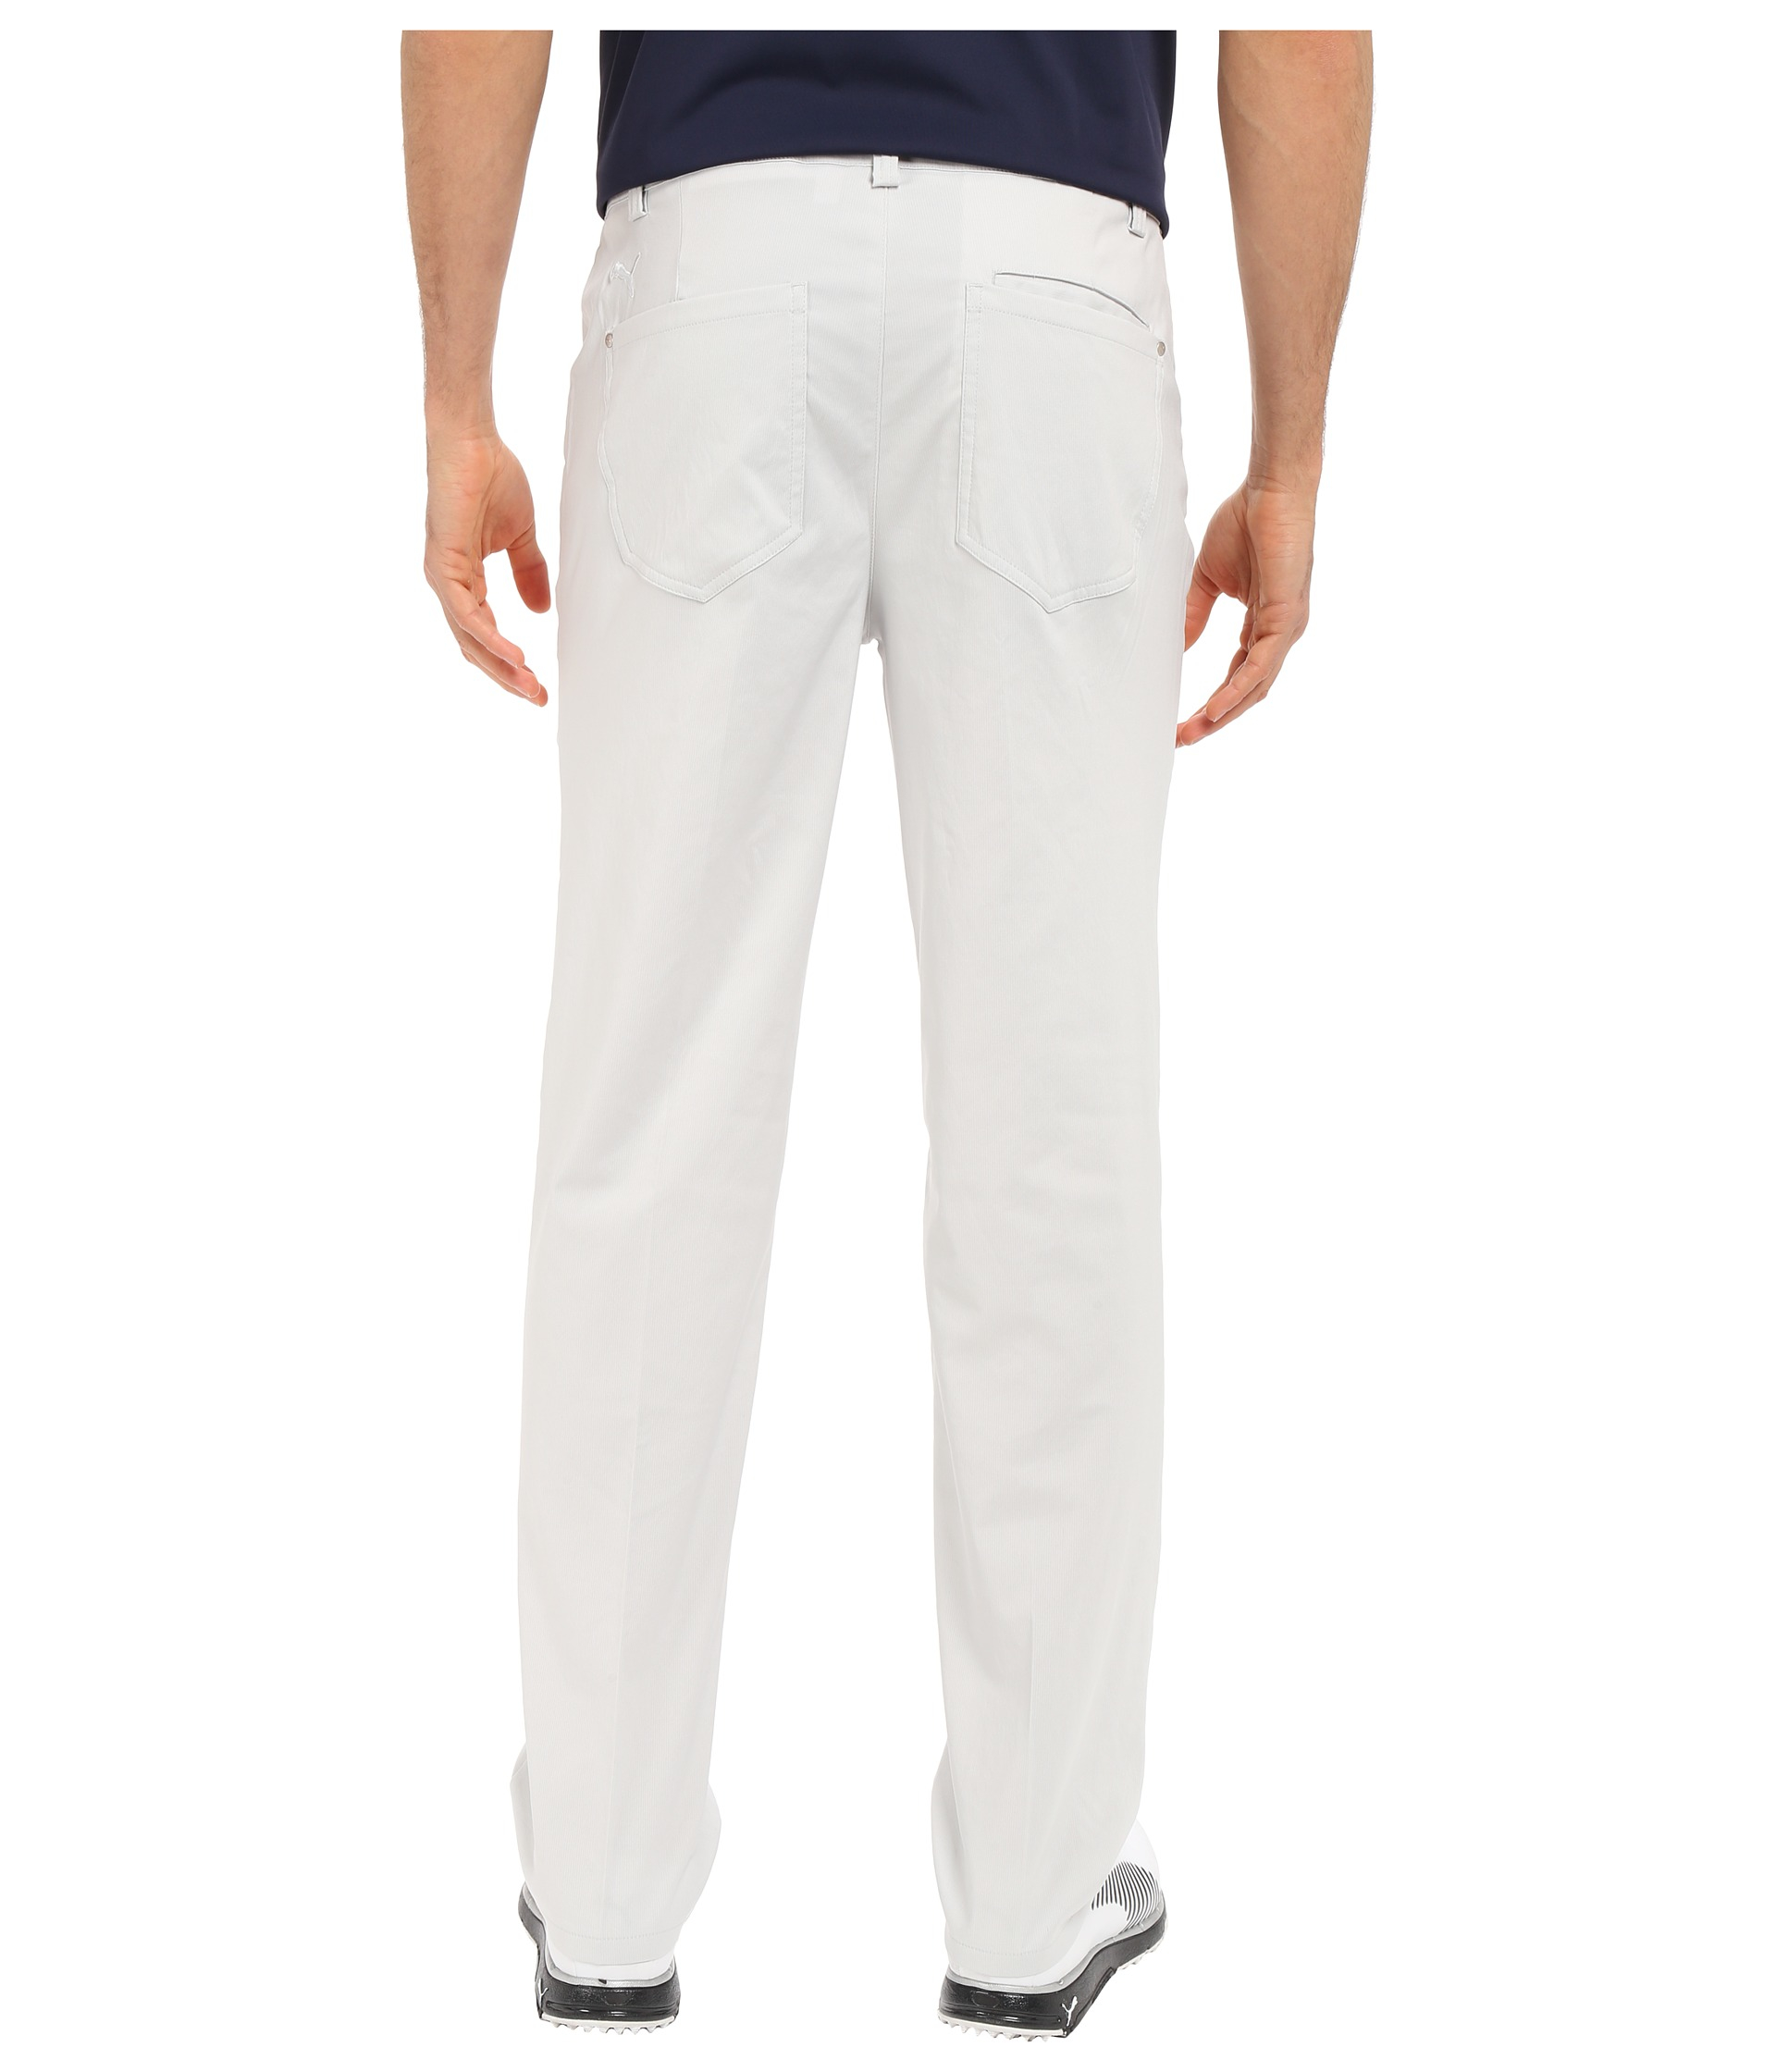 Lyst - Puma 6-pocket Pants in White for Men